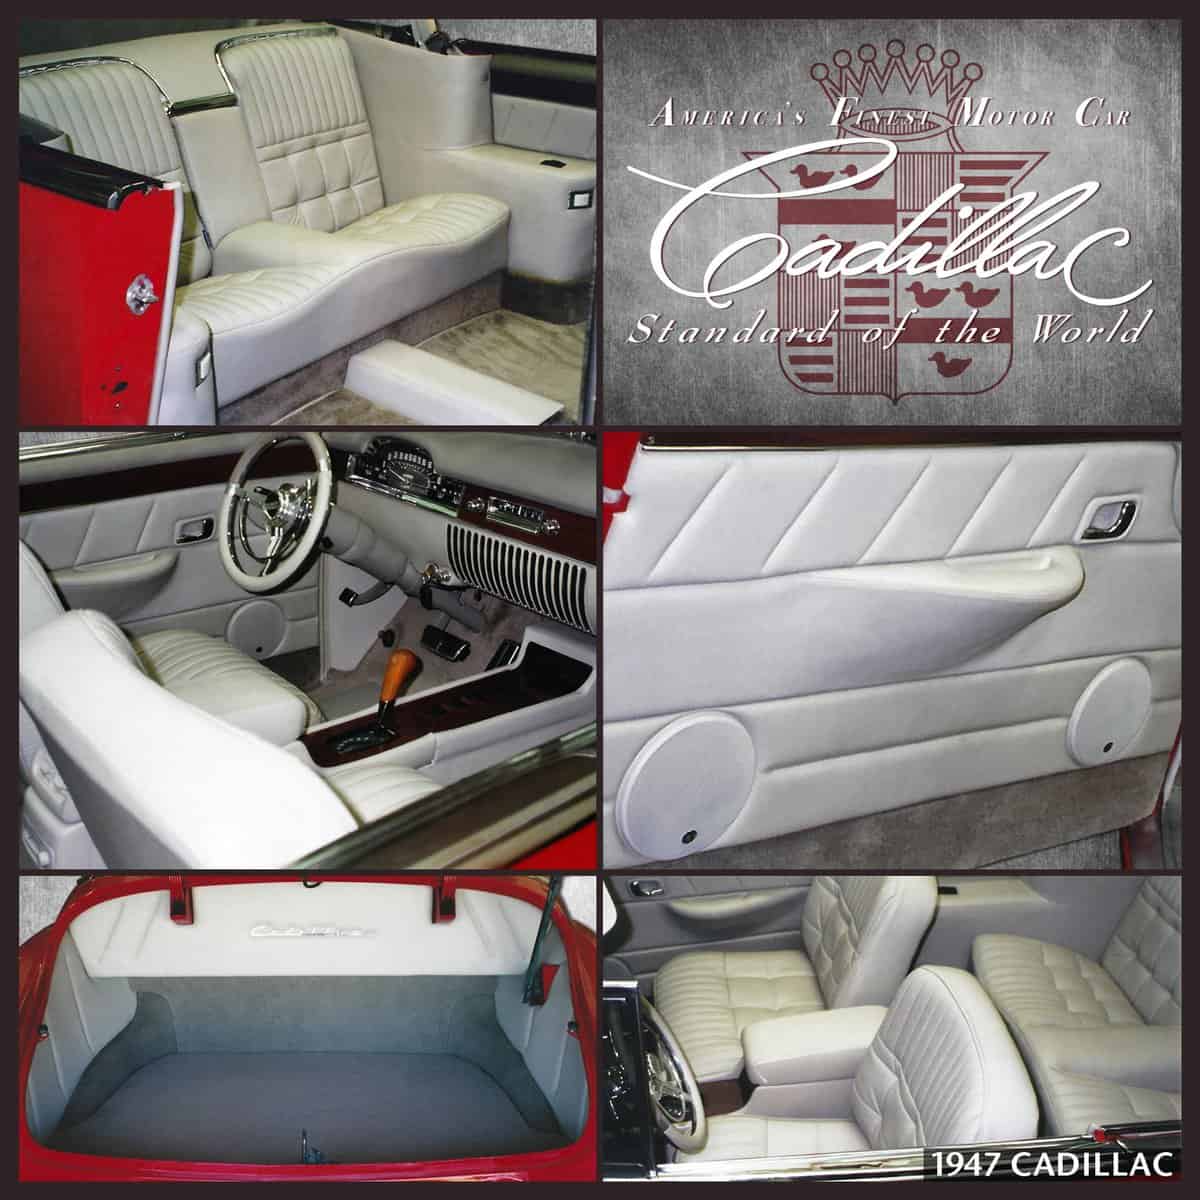 1947 Cadillac - Automotive Fabric Repair